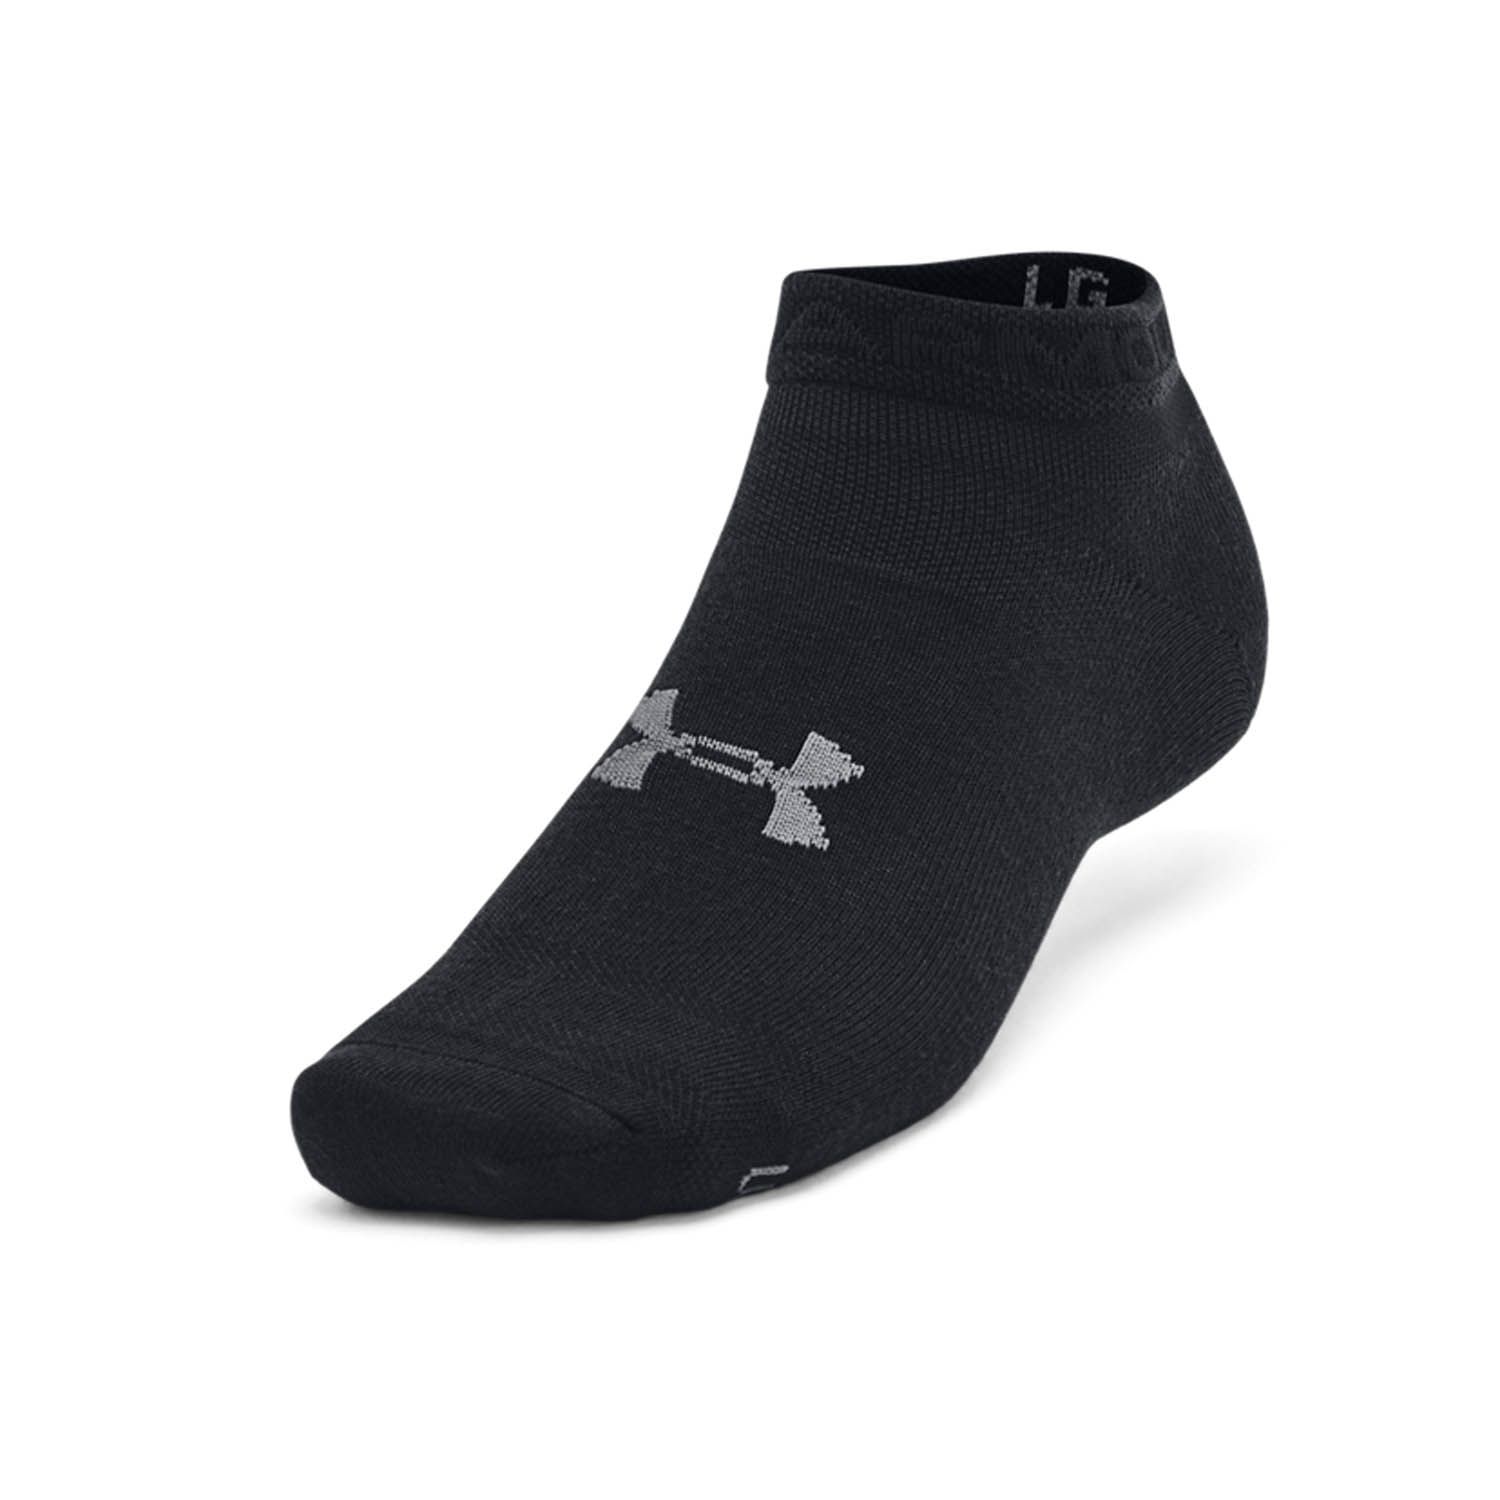 Under Armour Essential x 3 Socks - Black/Castlerock